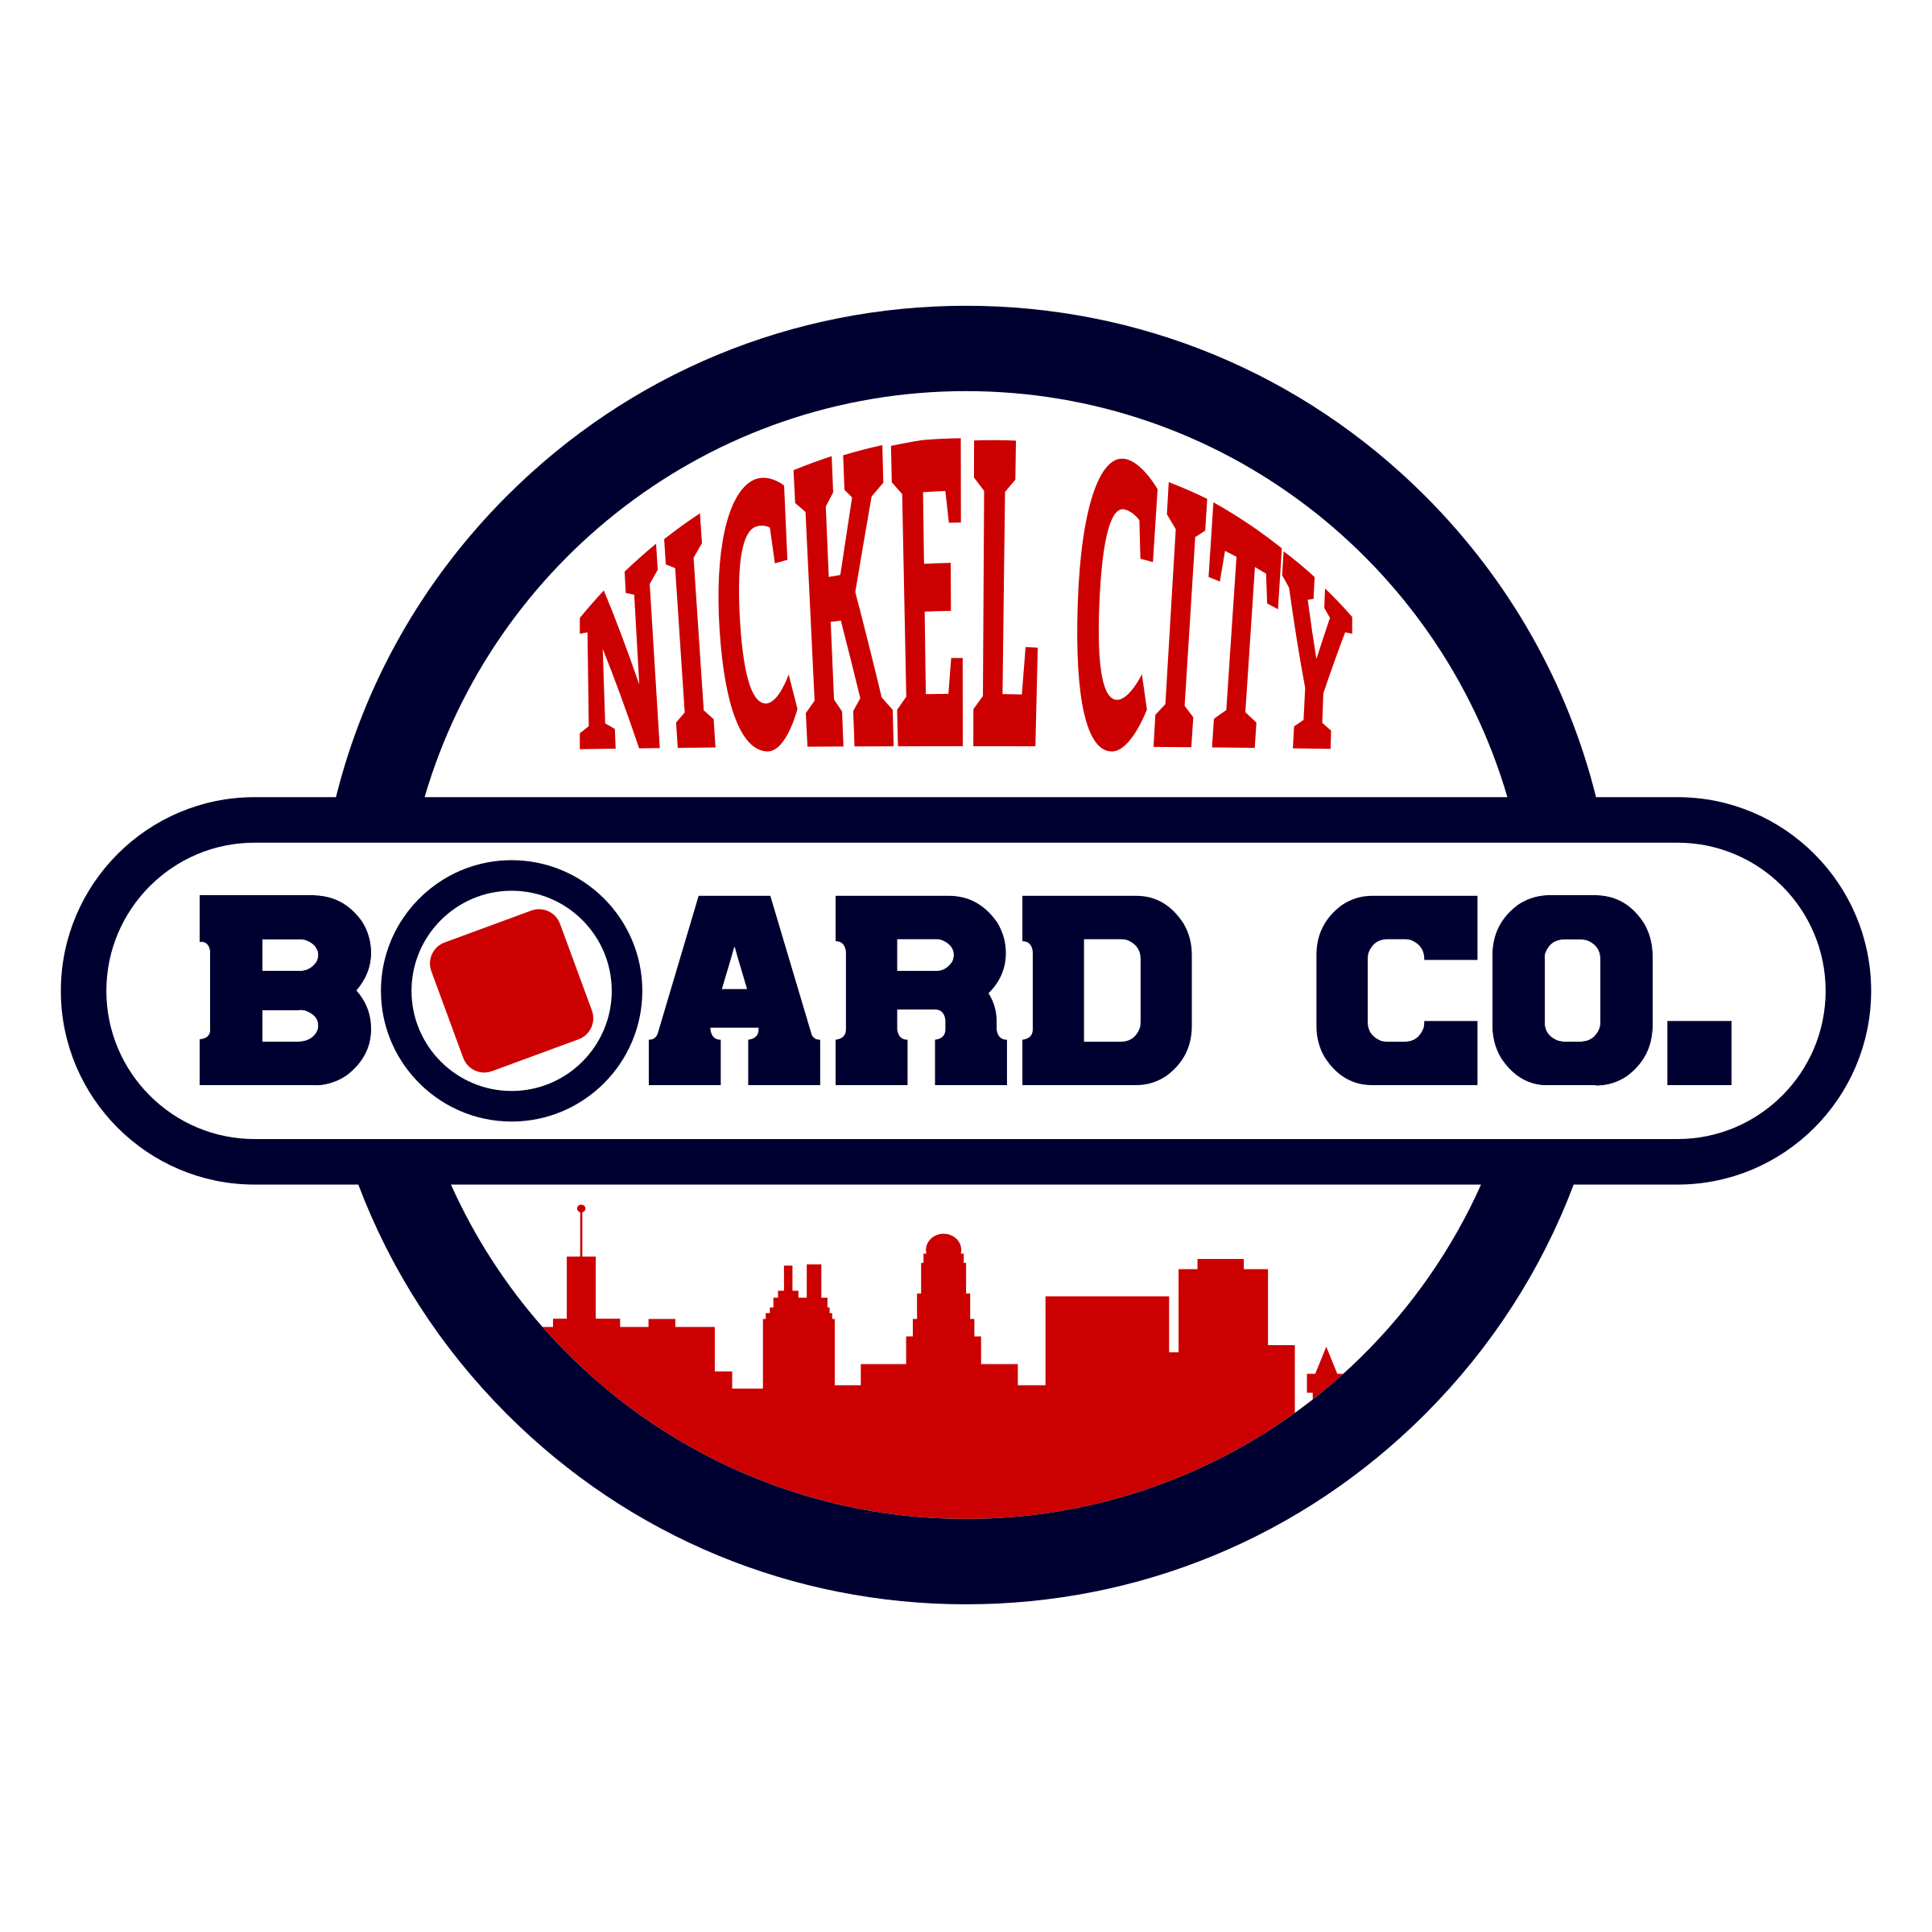 Nickel City Board Co.